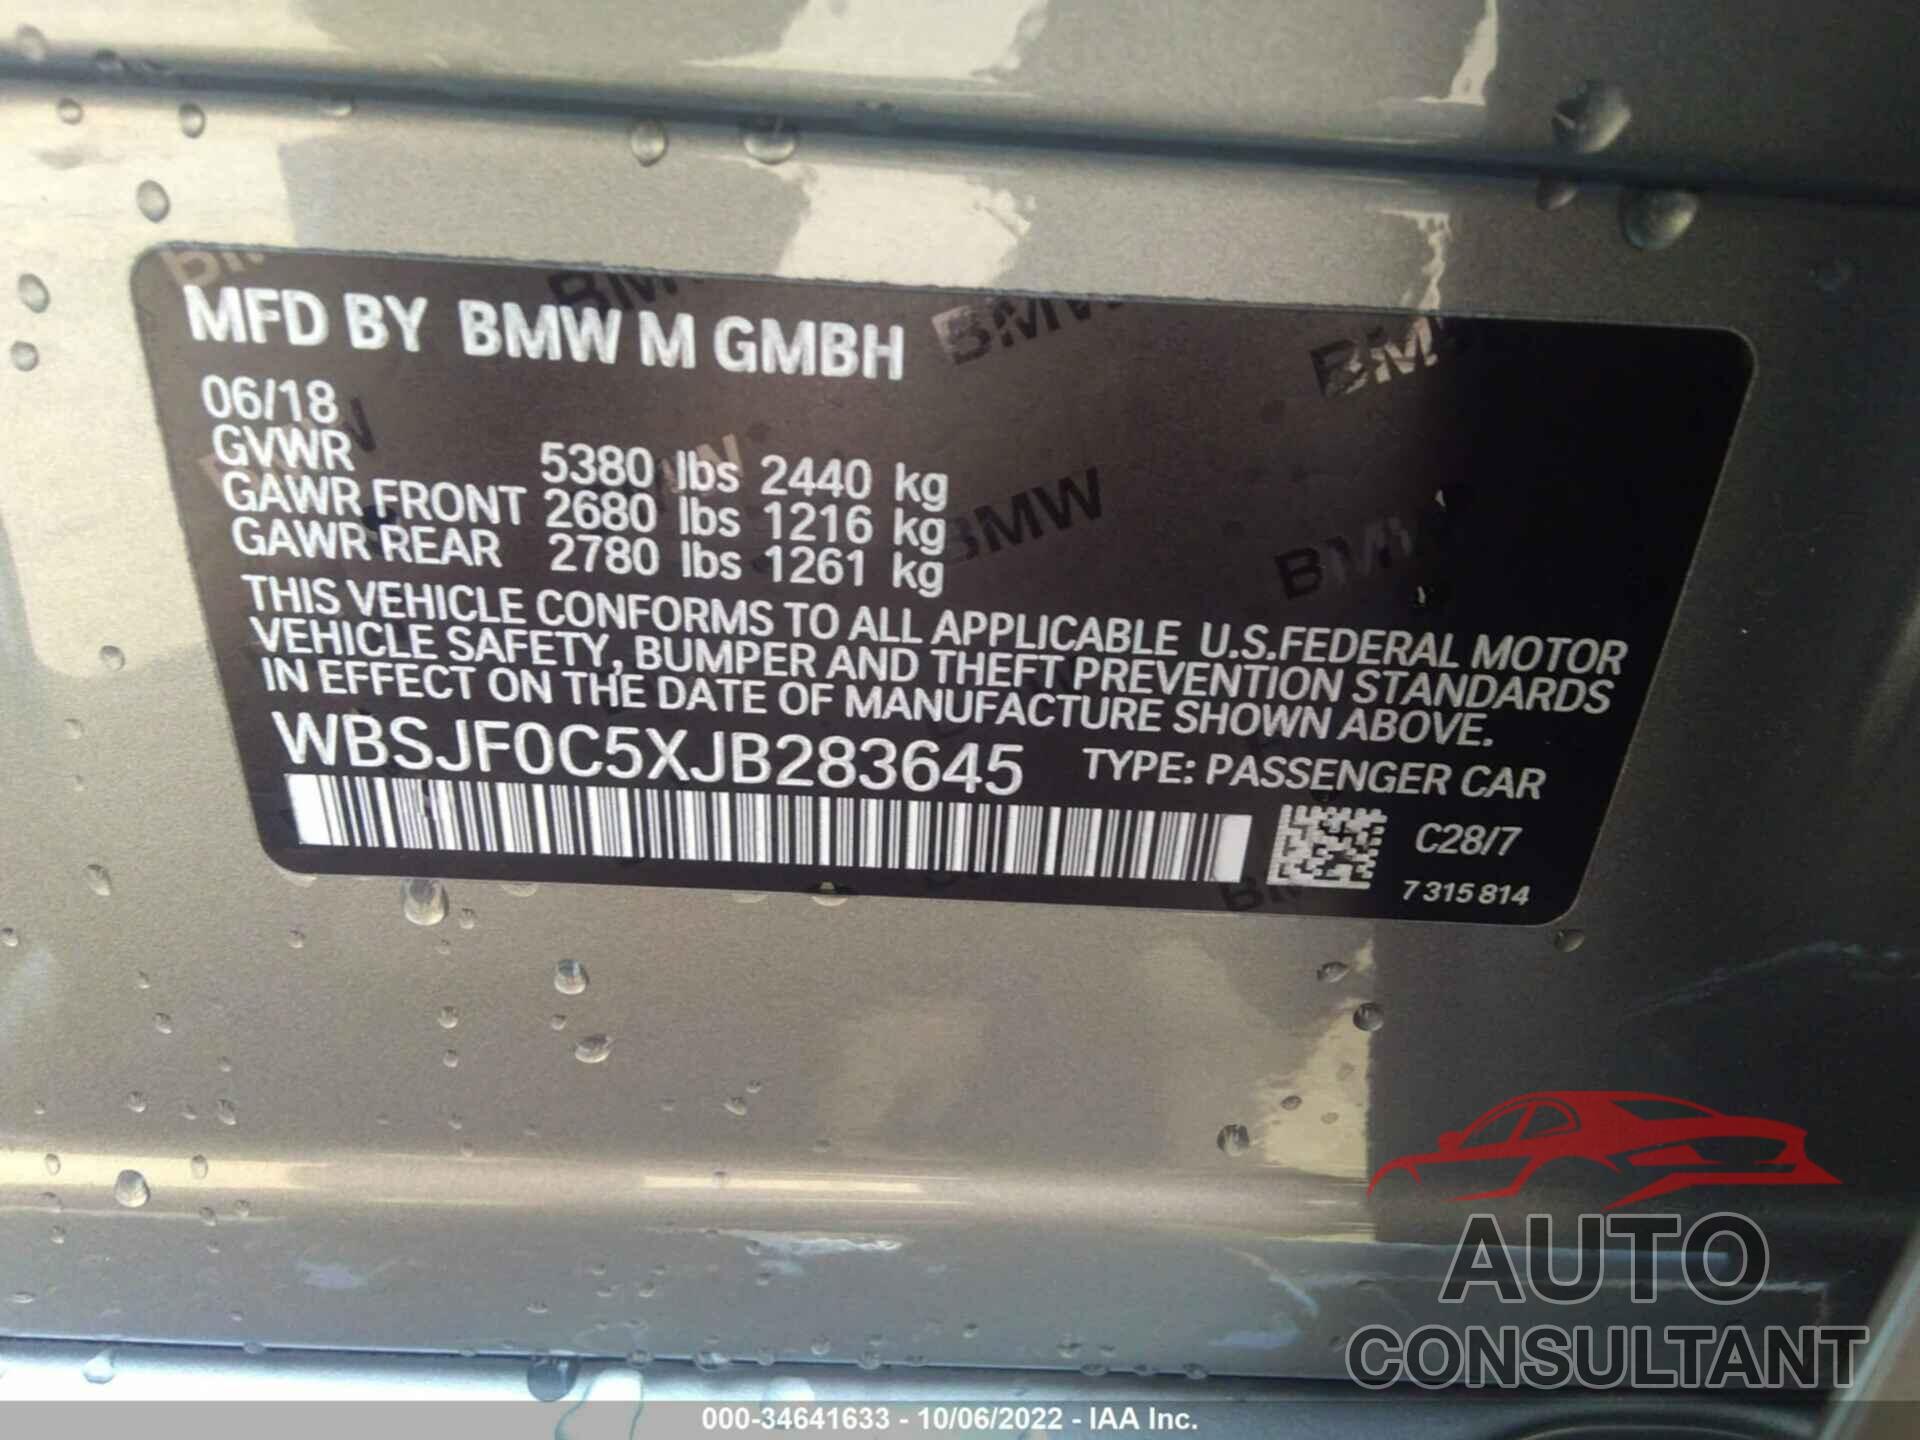 BMW M5 2018 - WBSJF0C5XJB283645